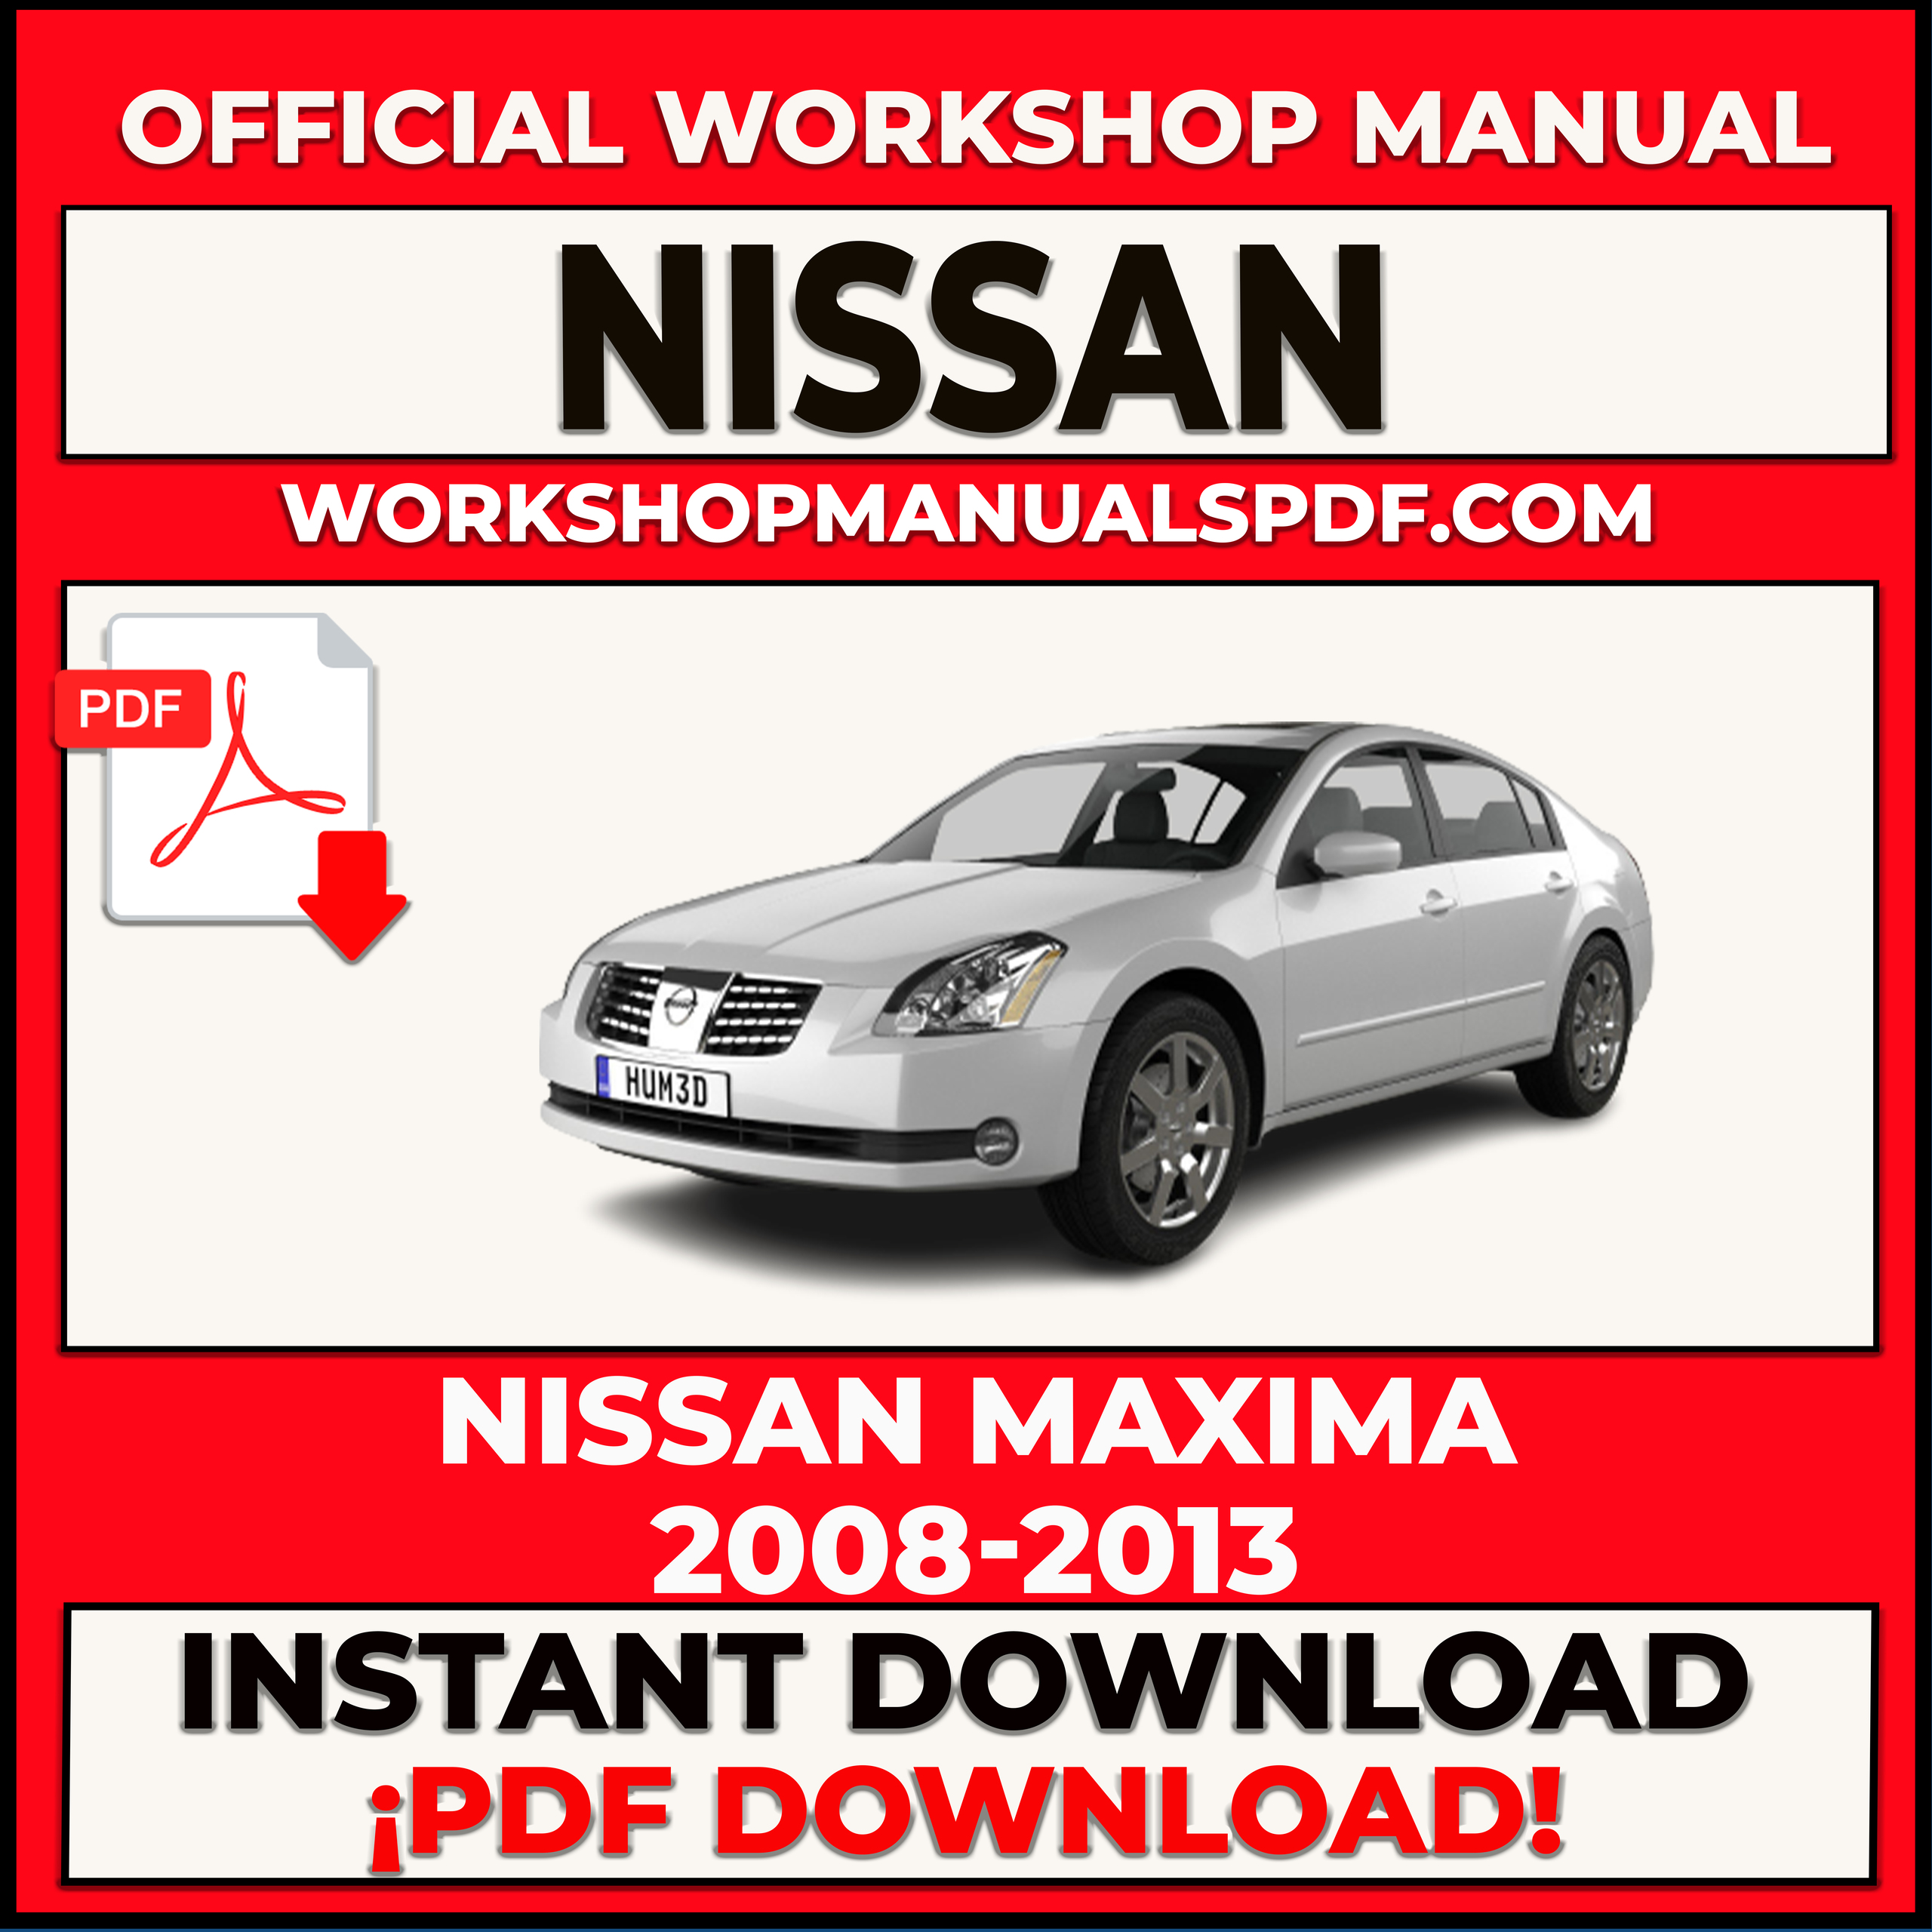 Nissan Maxima 2008-2013 Workshop Repair Service Manual PDF